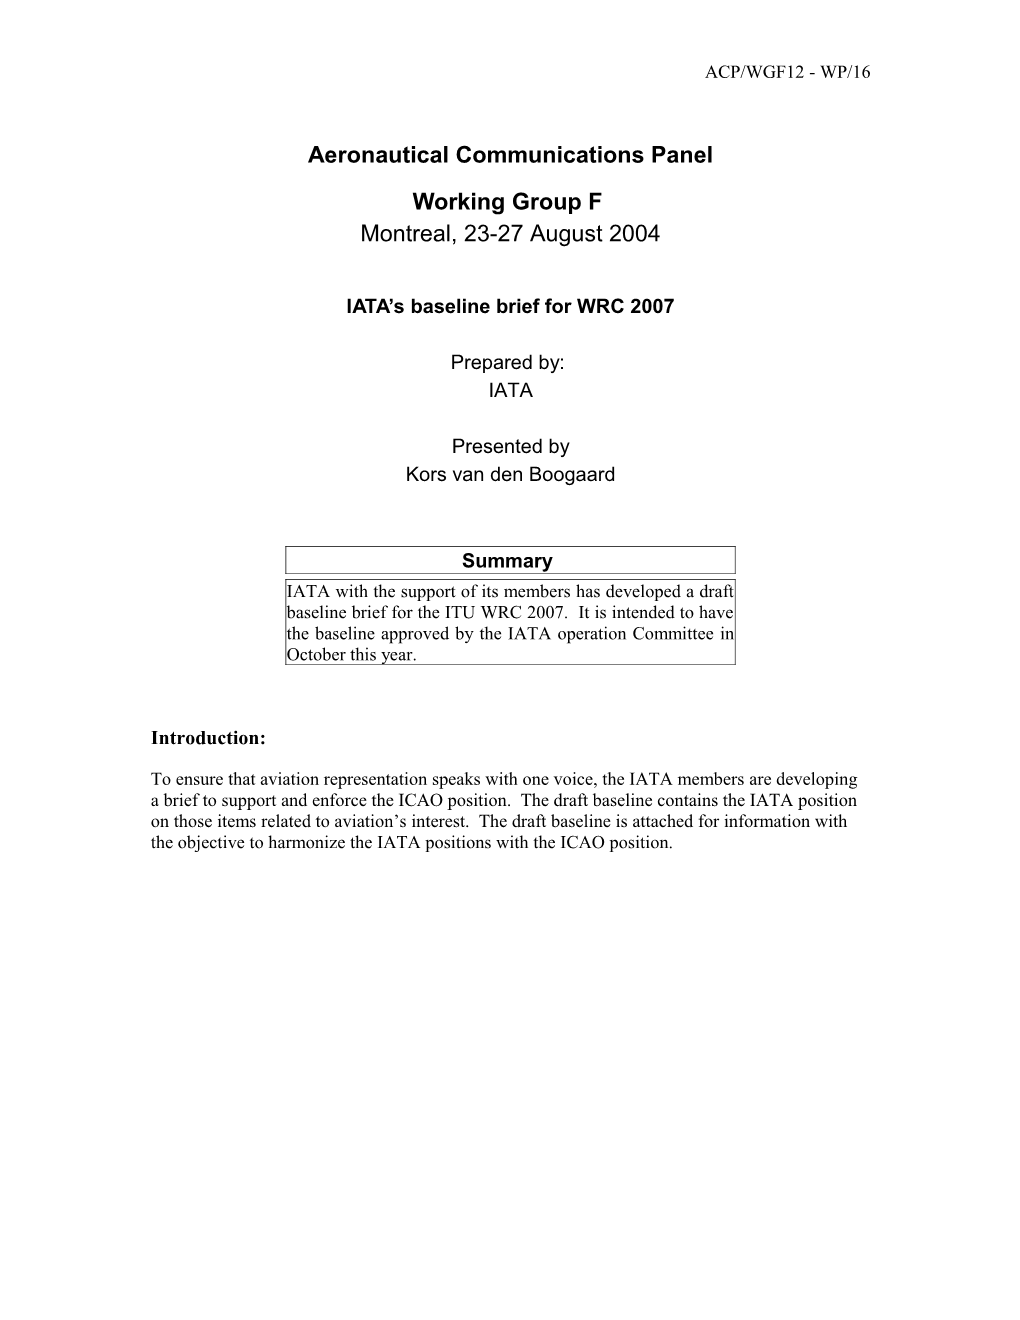 IATA's Baseline Brief for WRC-07